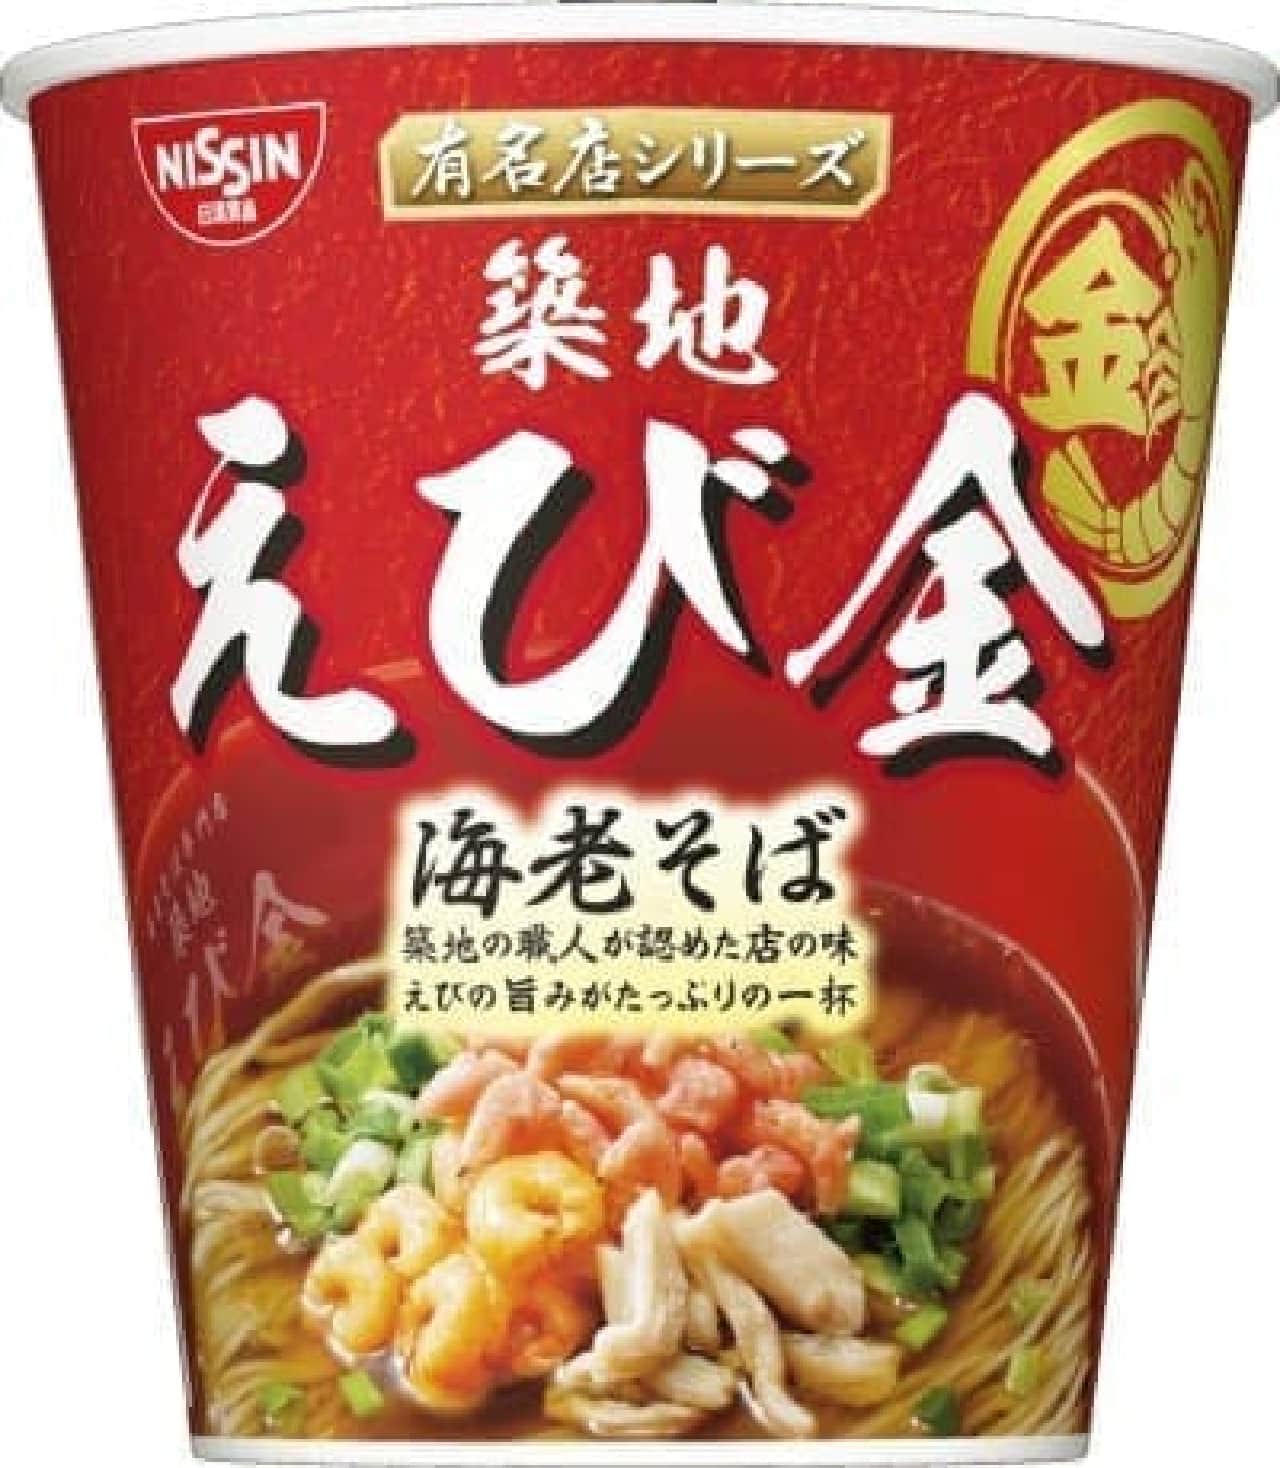 Nissin Foods "Tsukiji Ebi Kin Shrimp Soba"